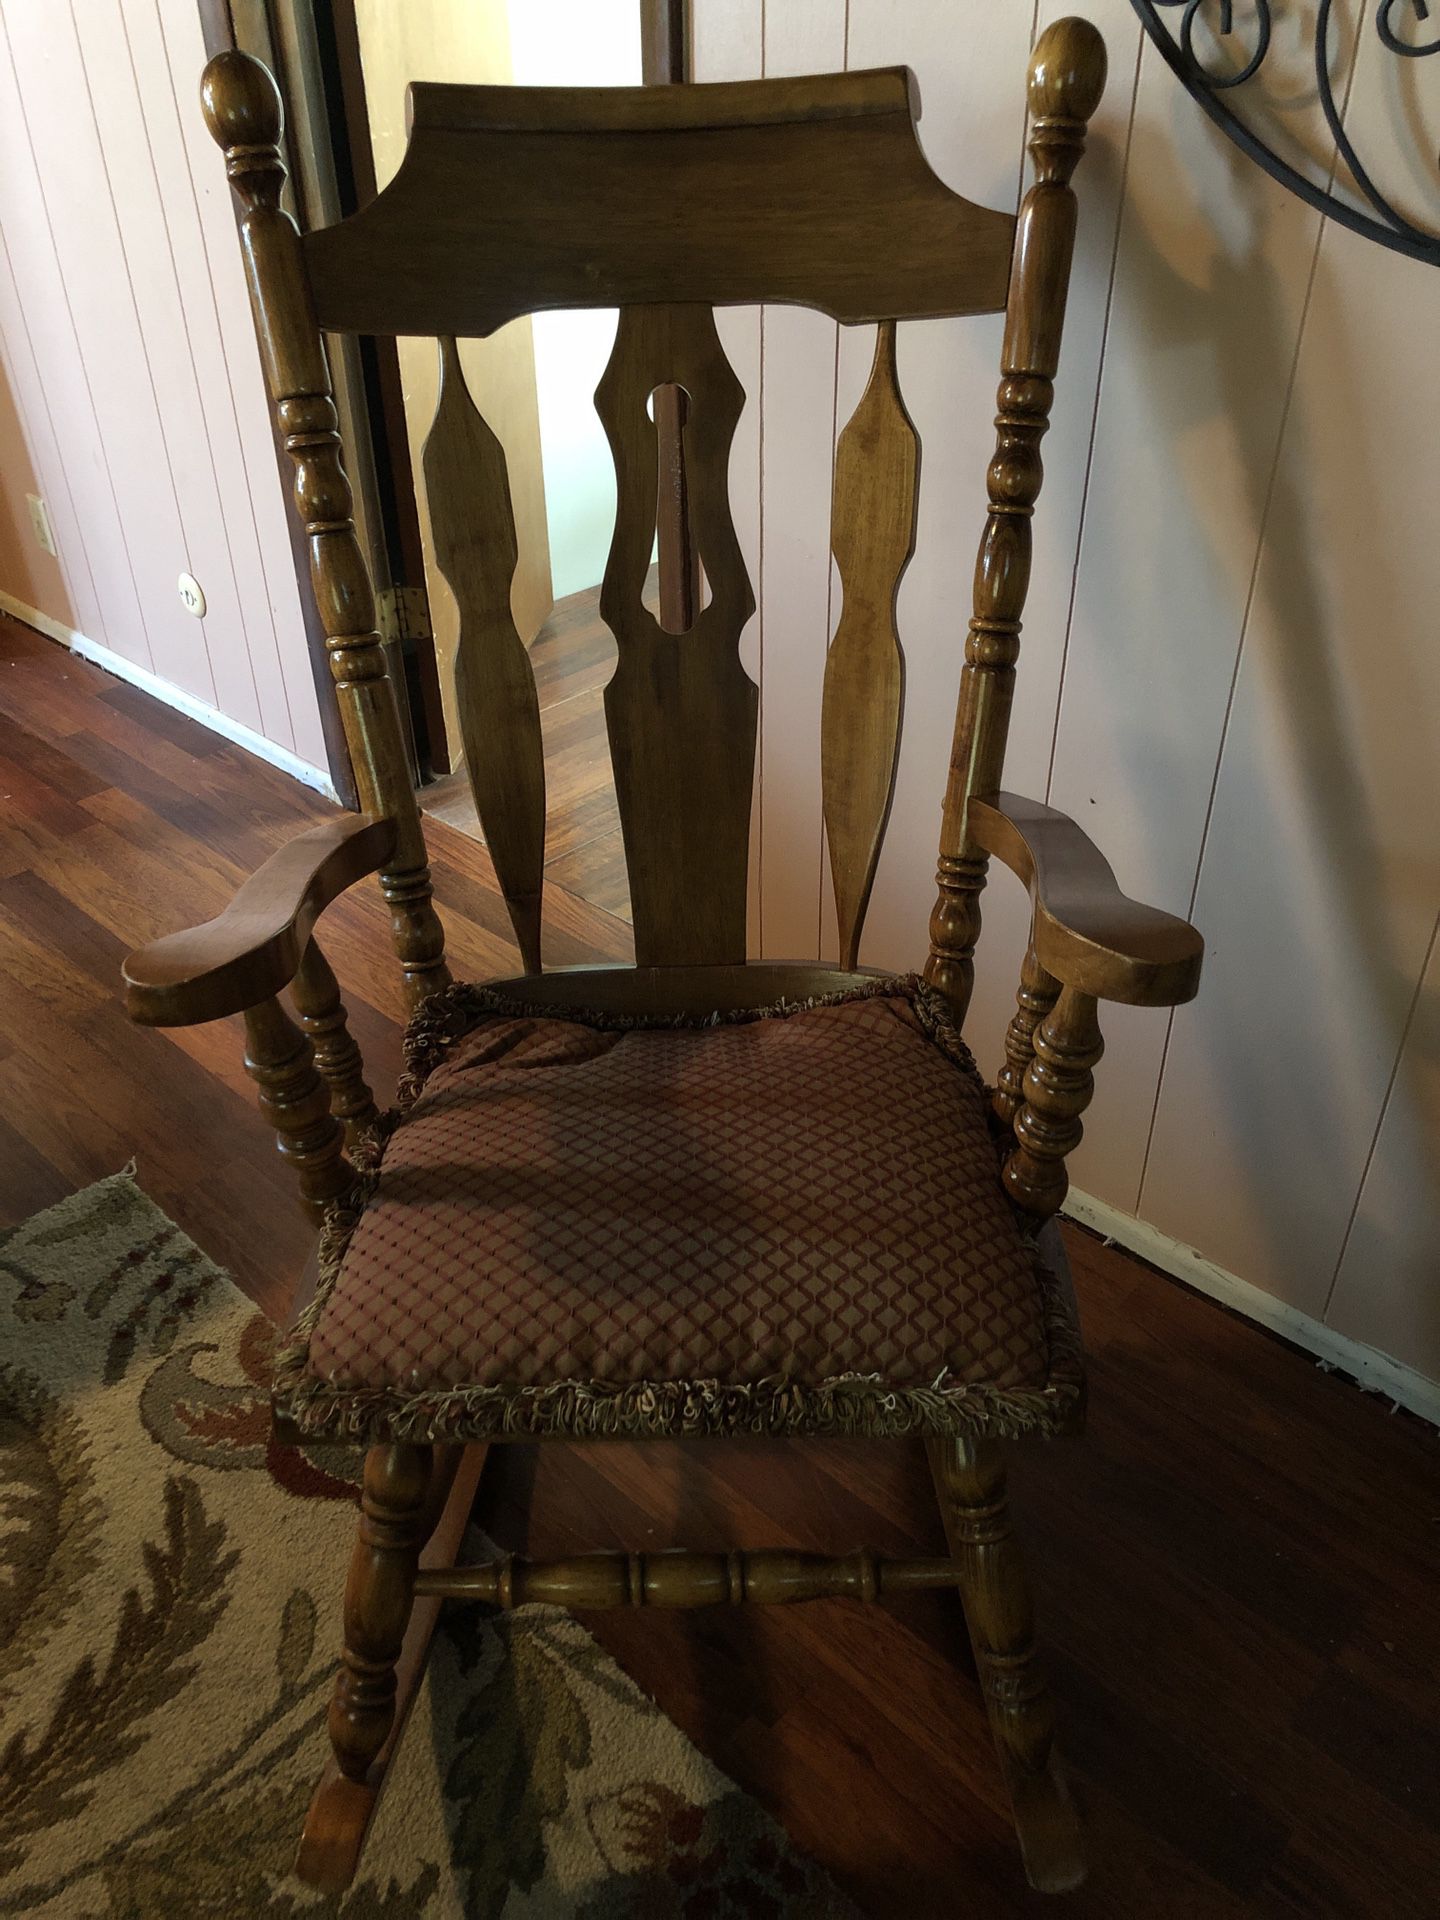 wooden rocking chair